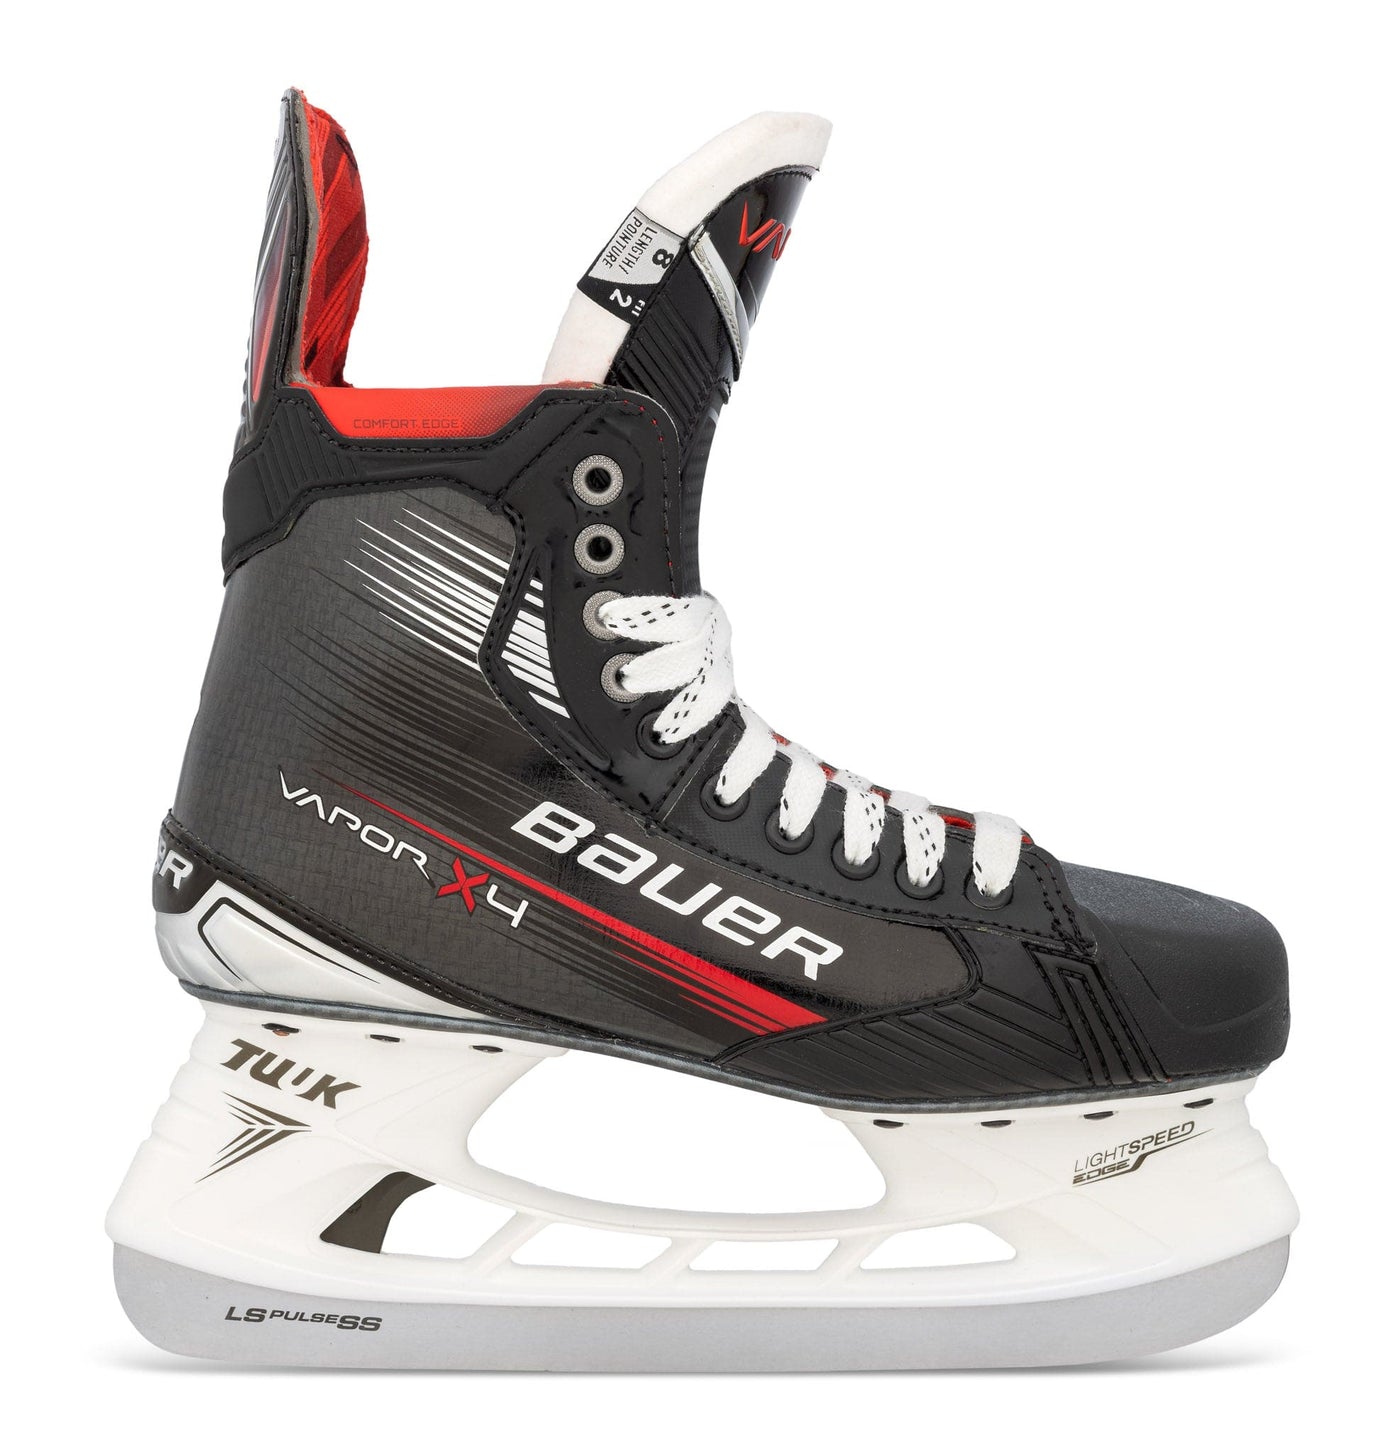 Bauer Vapor X4 Intermediate Hockey Skates - The Hockey Shop Source For Sports